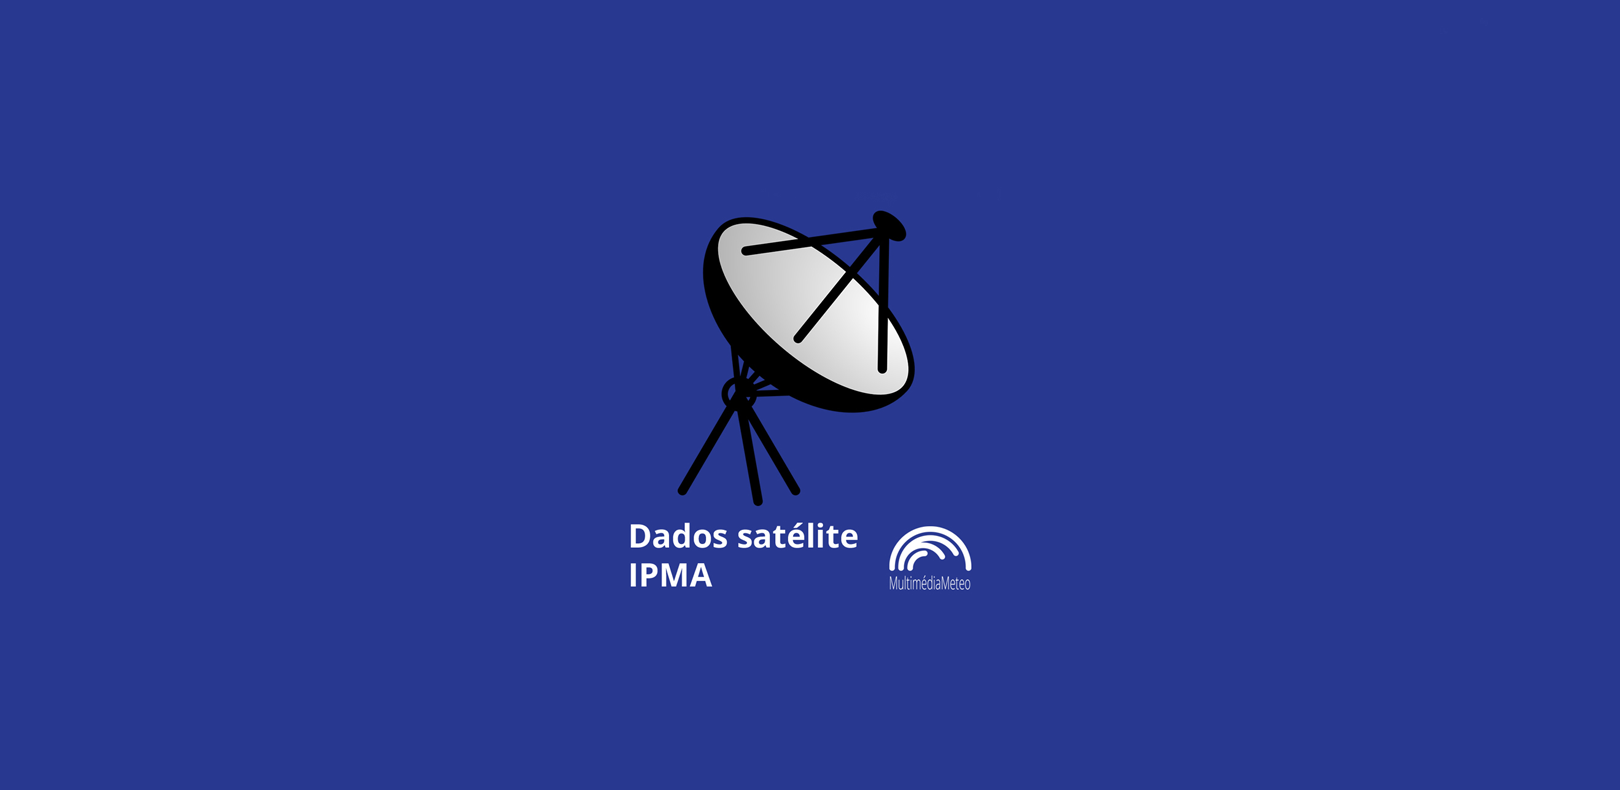  Dados satélite IPMA 14-01-2022